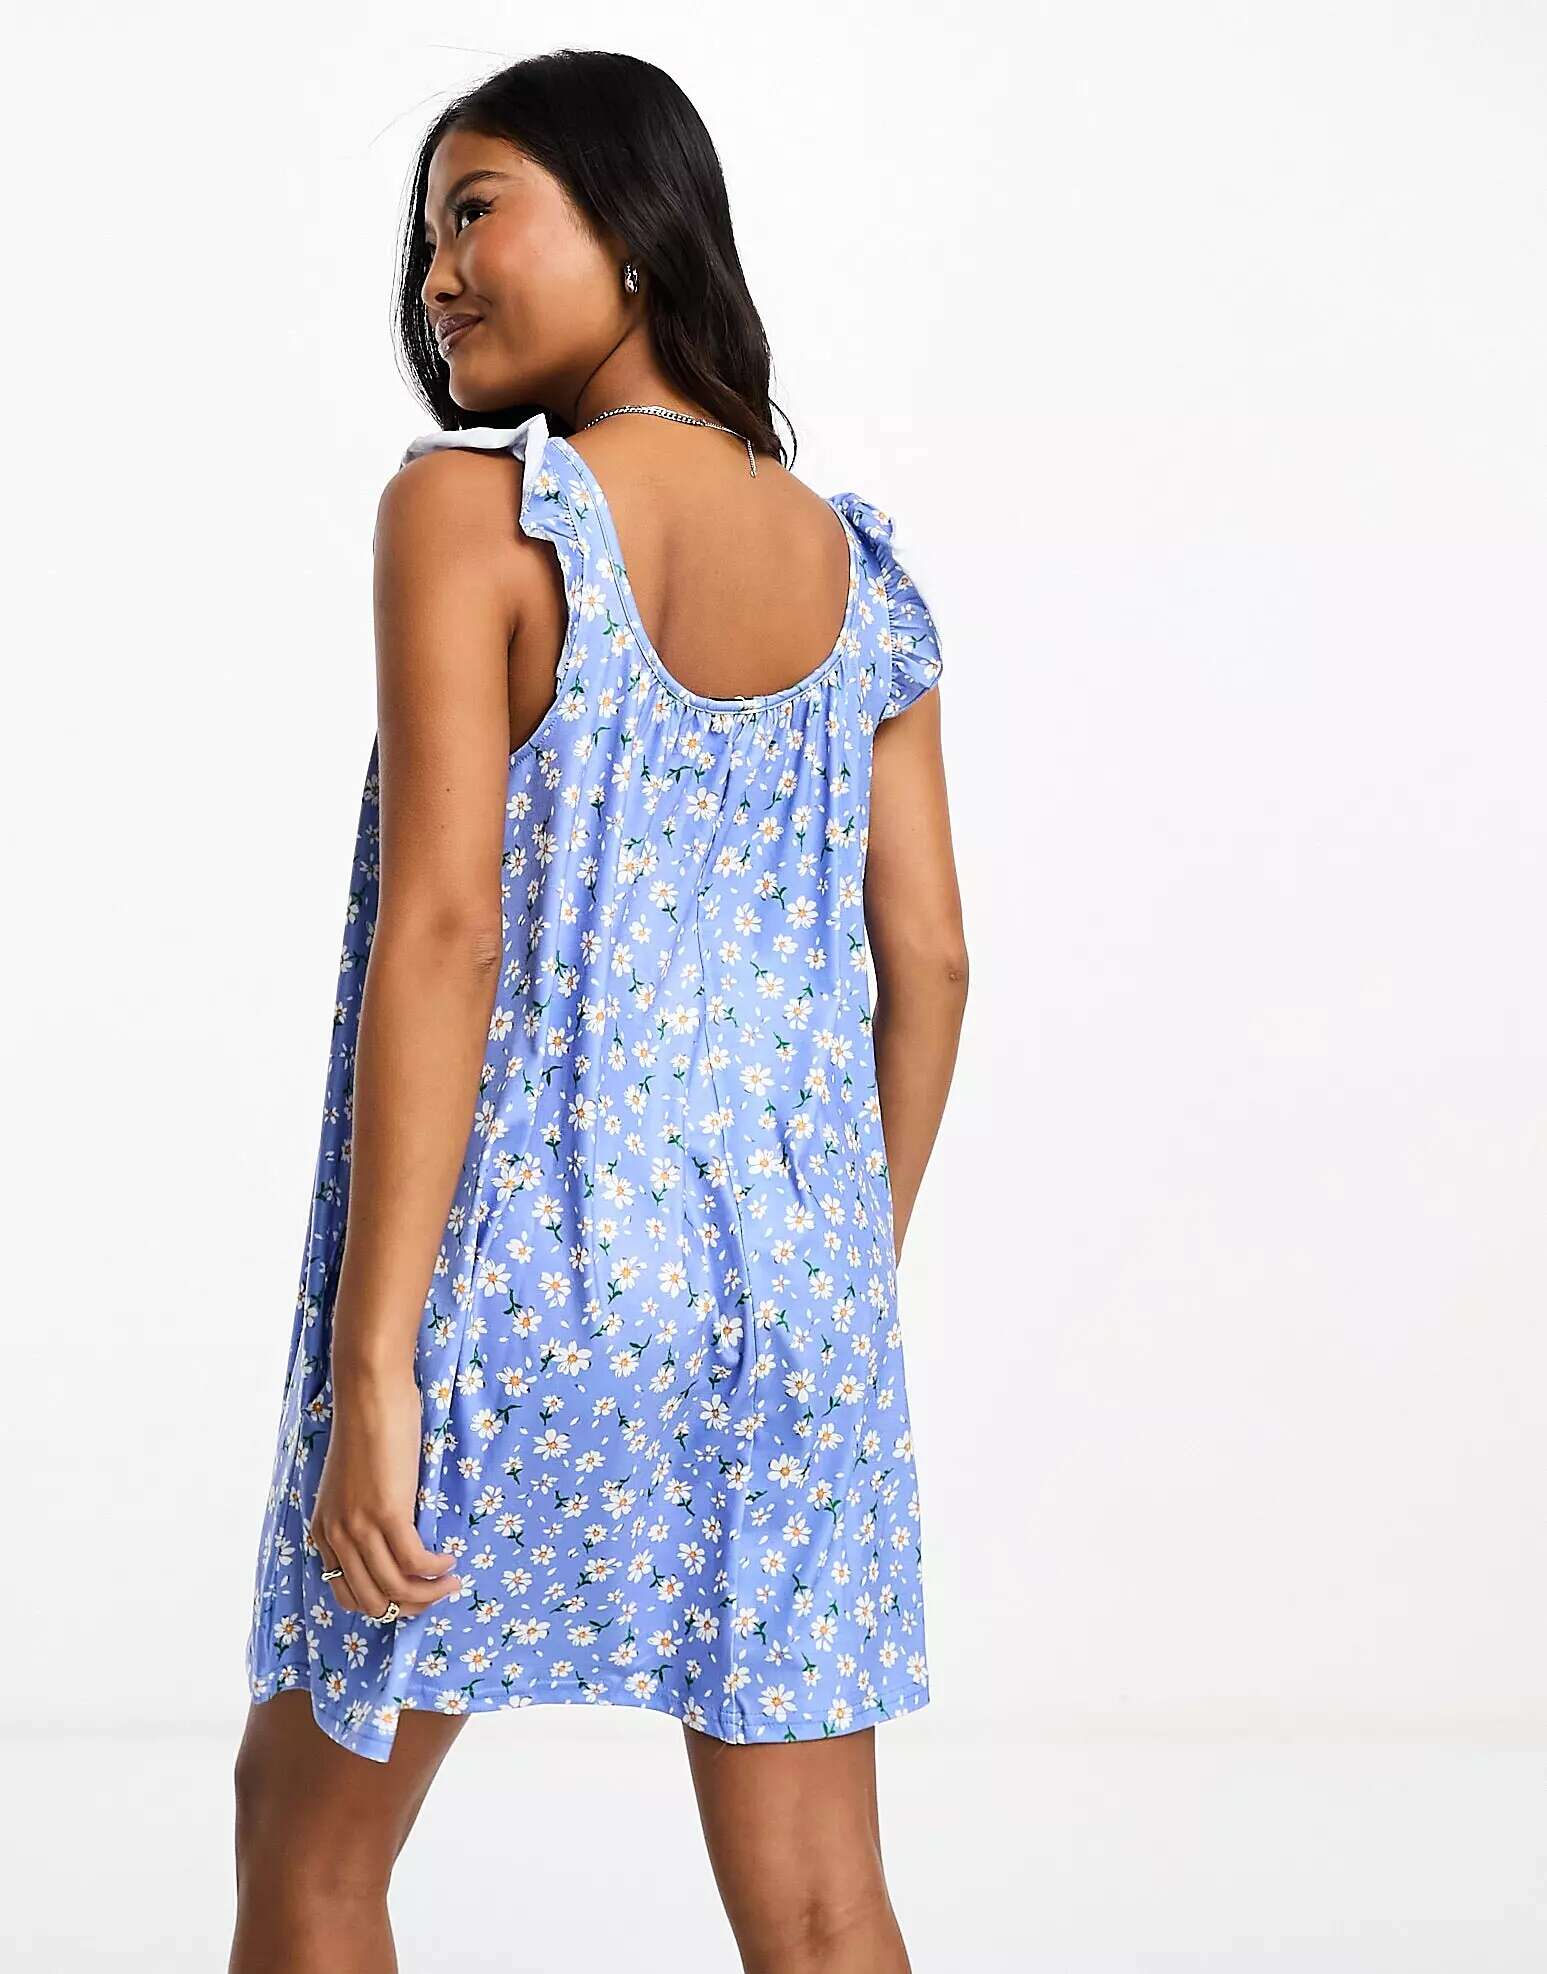 In The Style Синее мини-платье с завязками на плечах и принтом Stacey Solomon